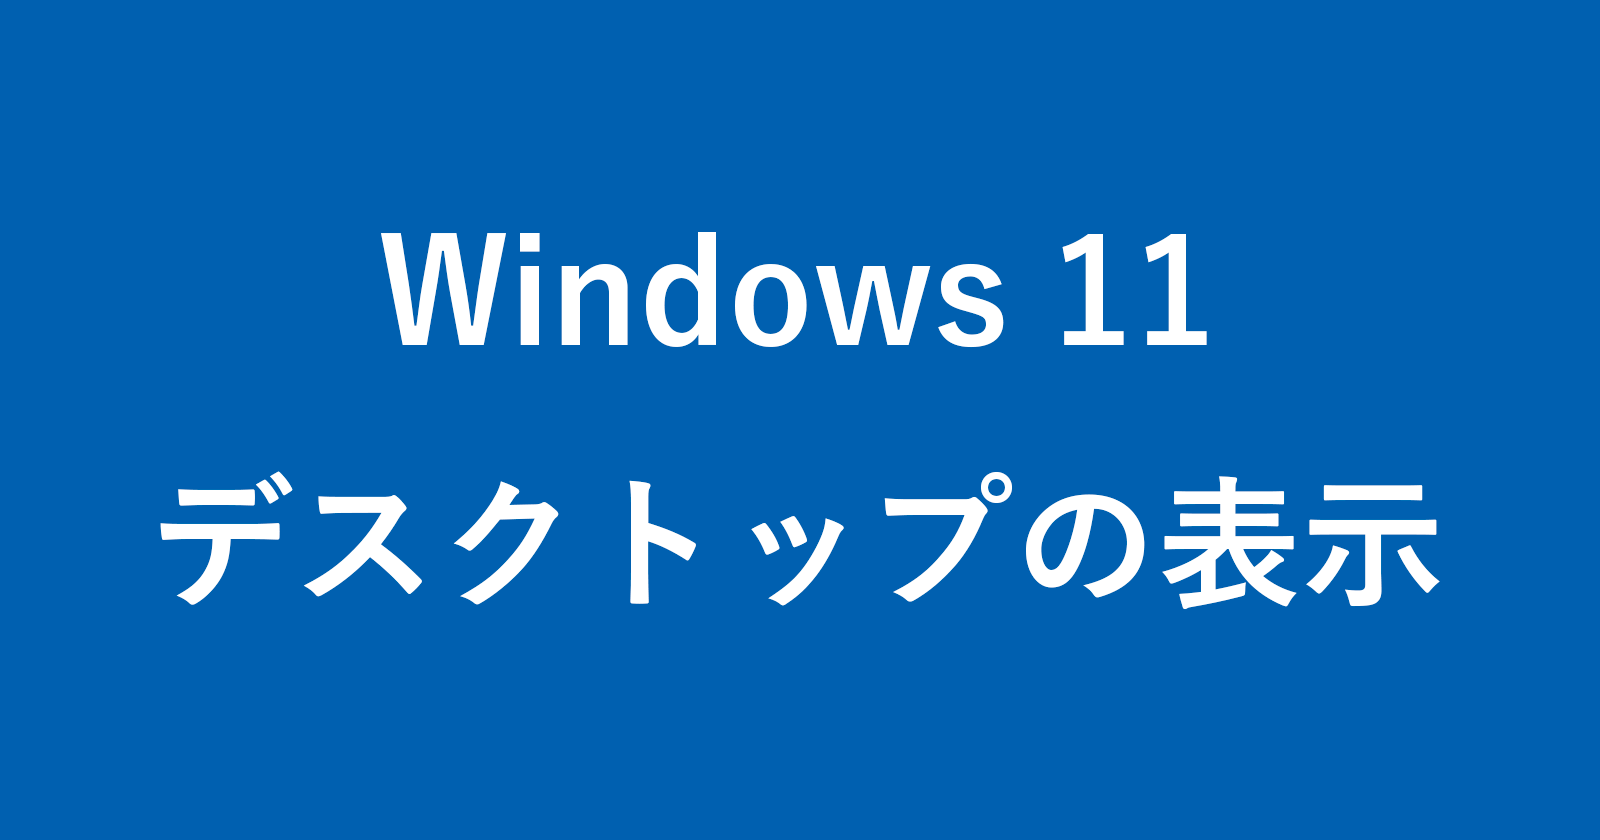 windows 11 veiw desktop